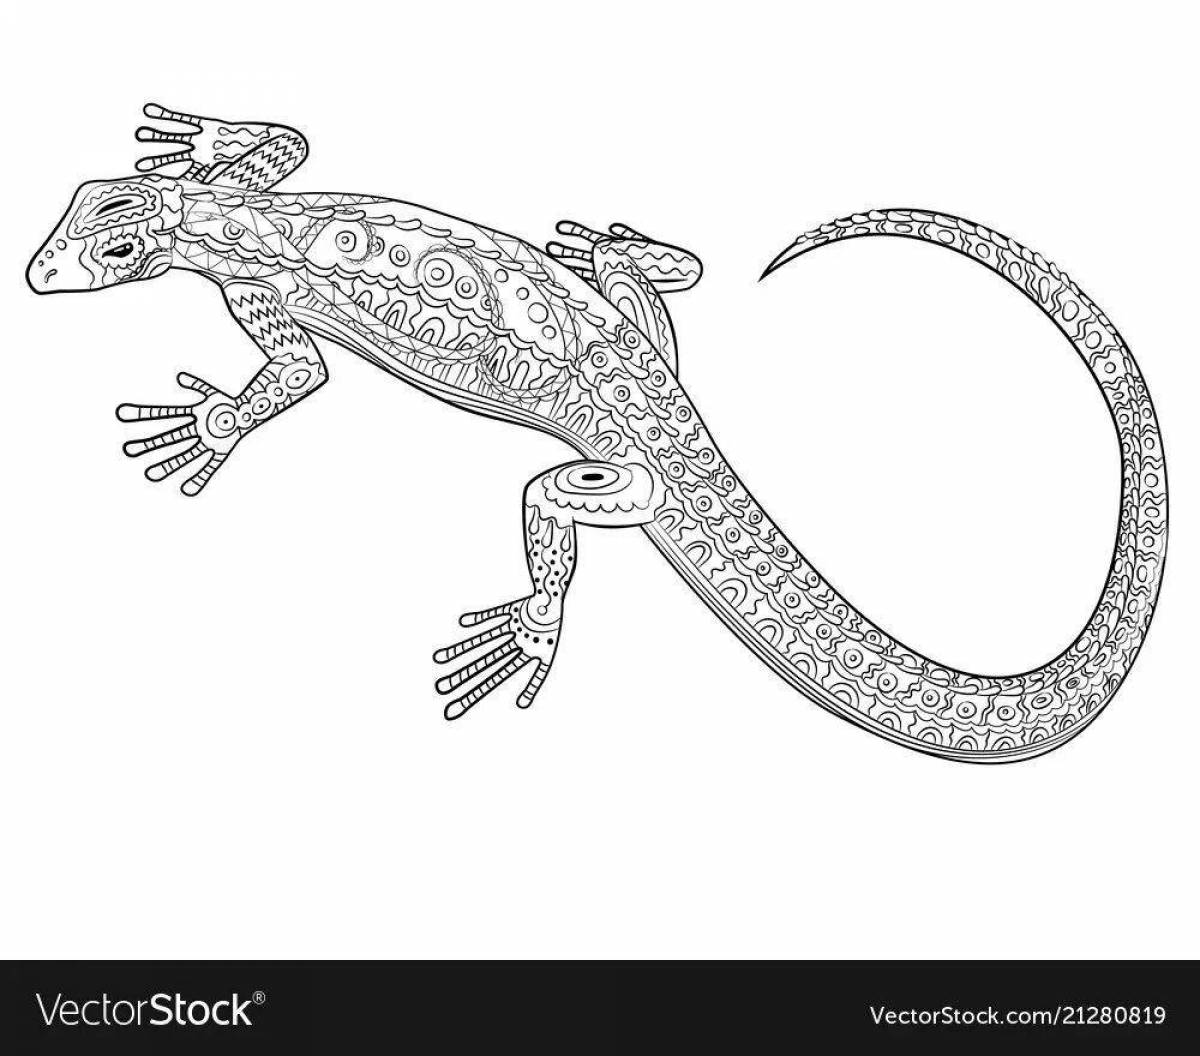 Magic lizard antistress coloring book